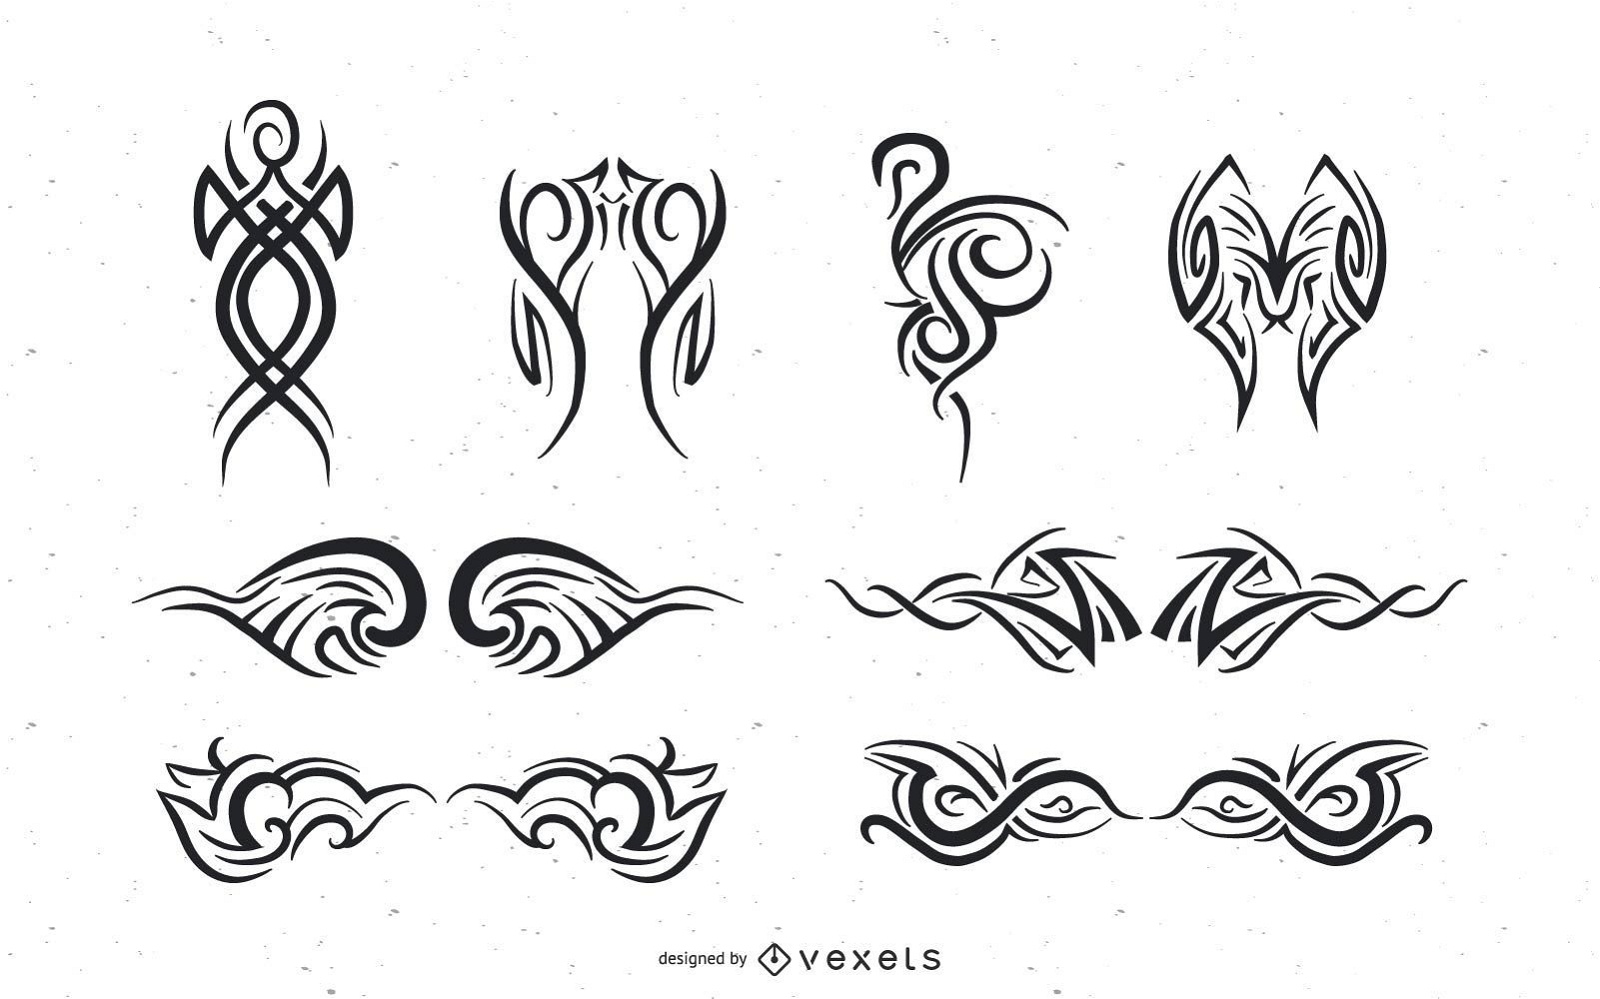  illustrator tribal vectors